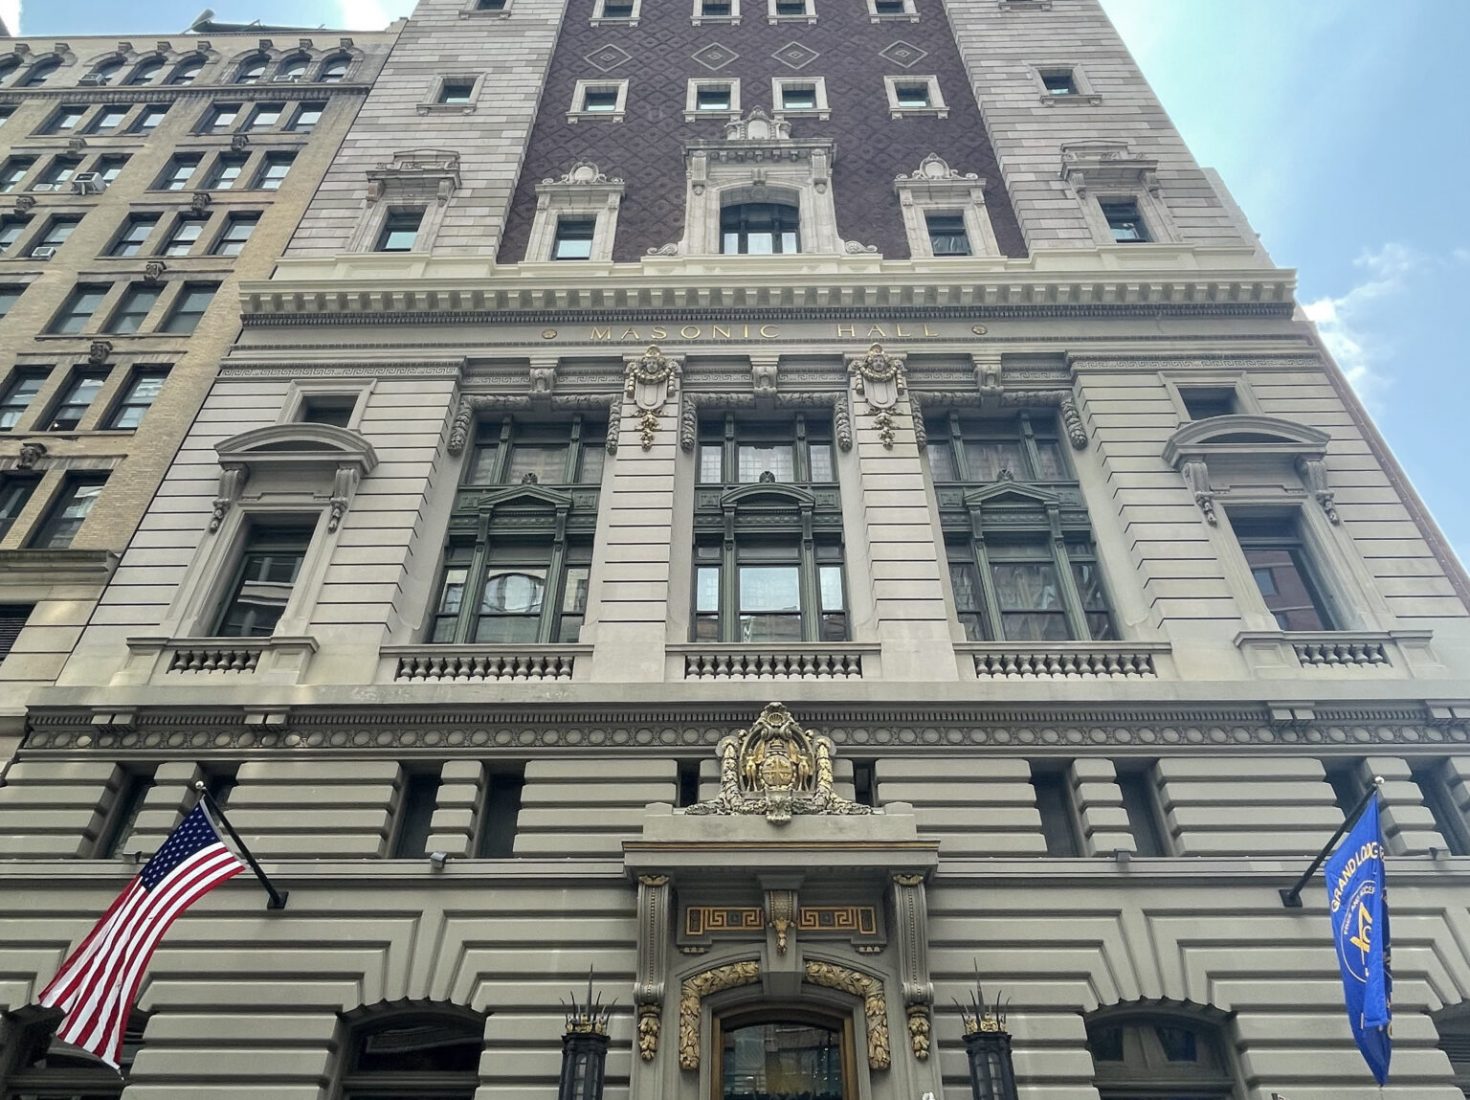 Masonic Hall NYC north facade after rehabilitation